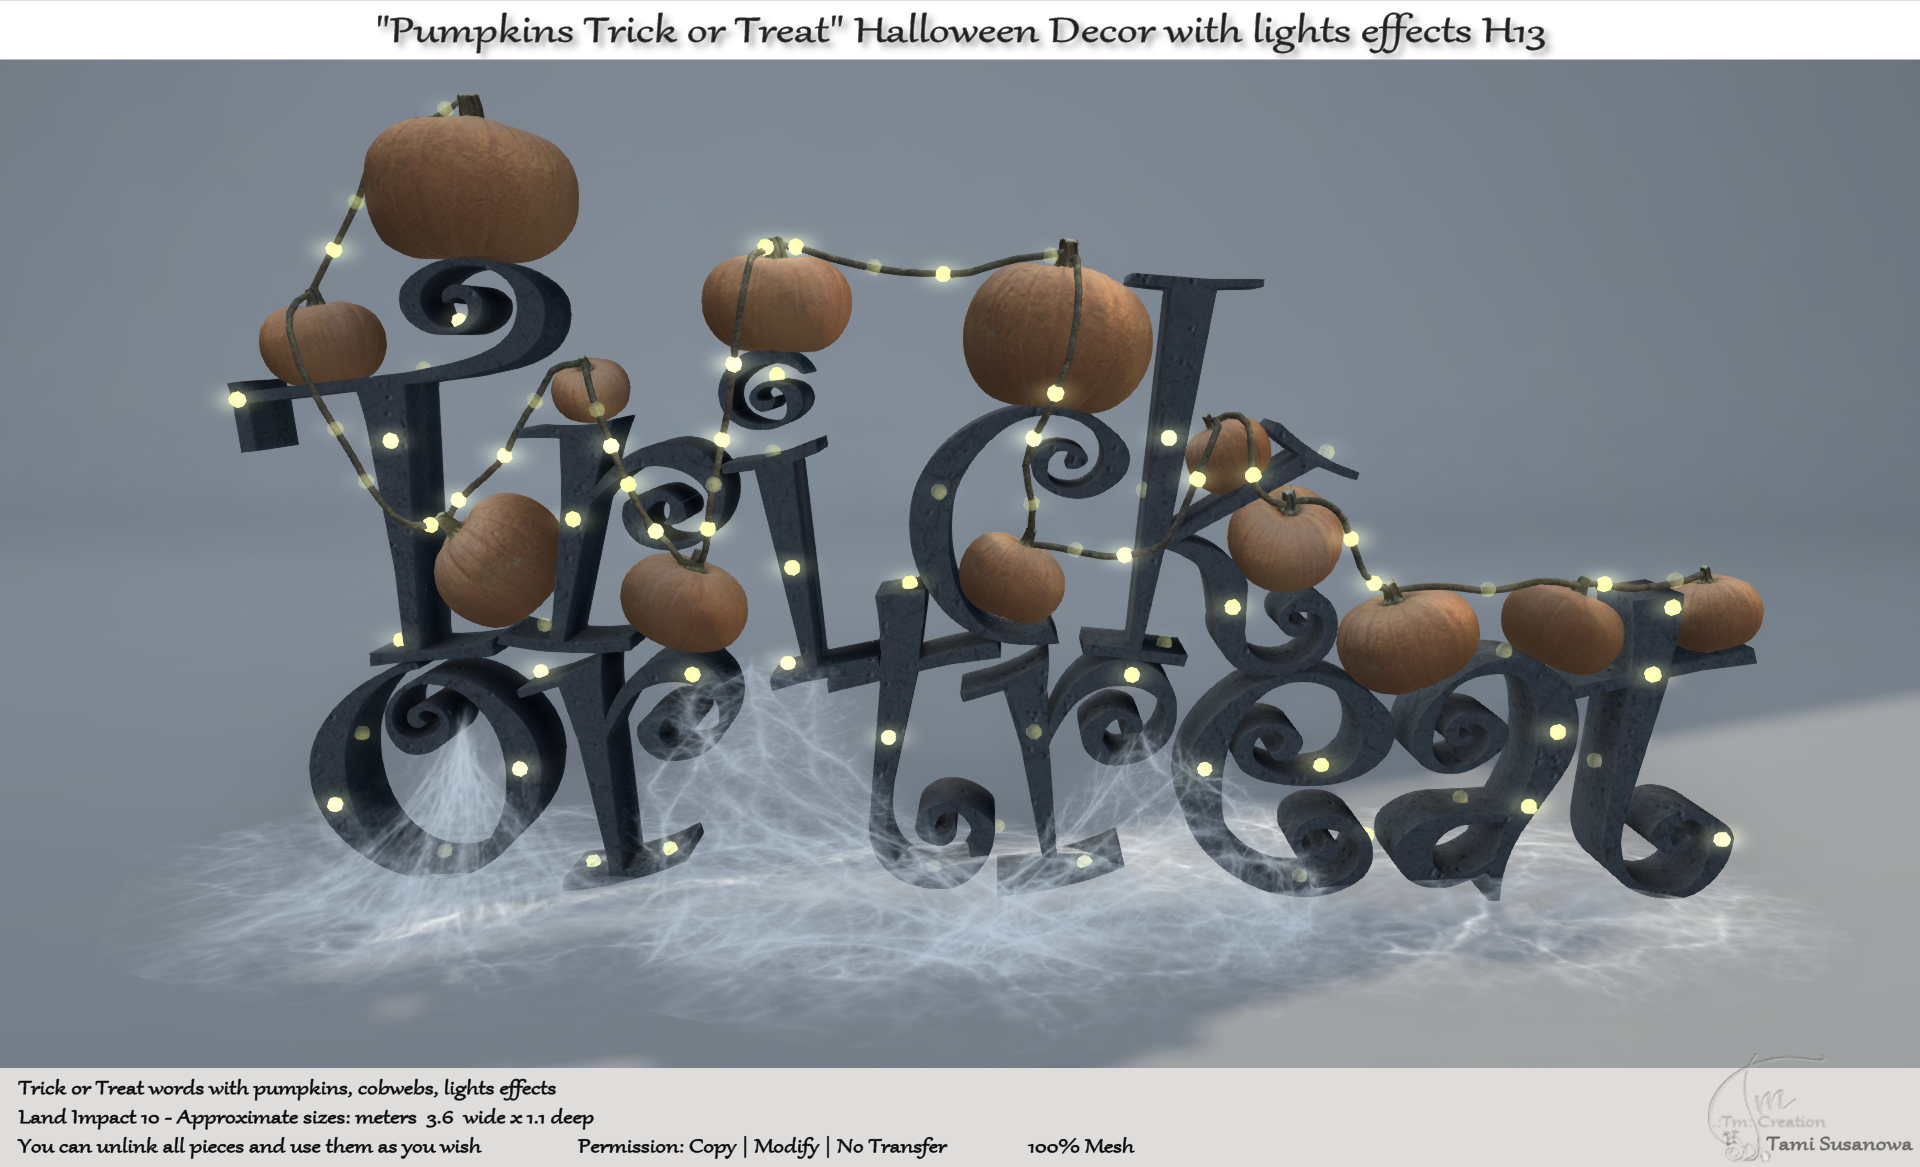 Tm Creation – “Pumpkins Trick or Treat” Halloween Decor